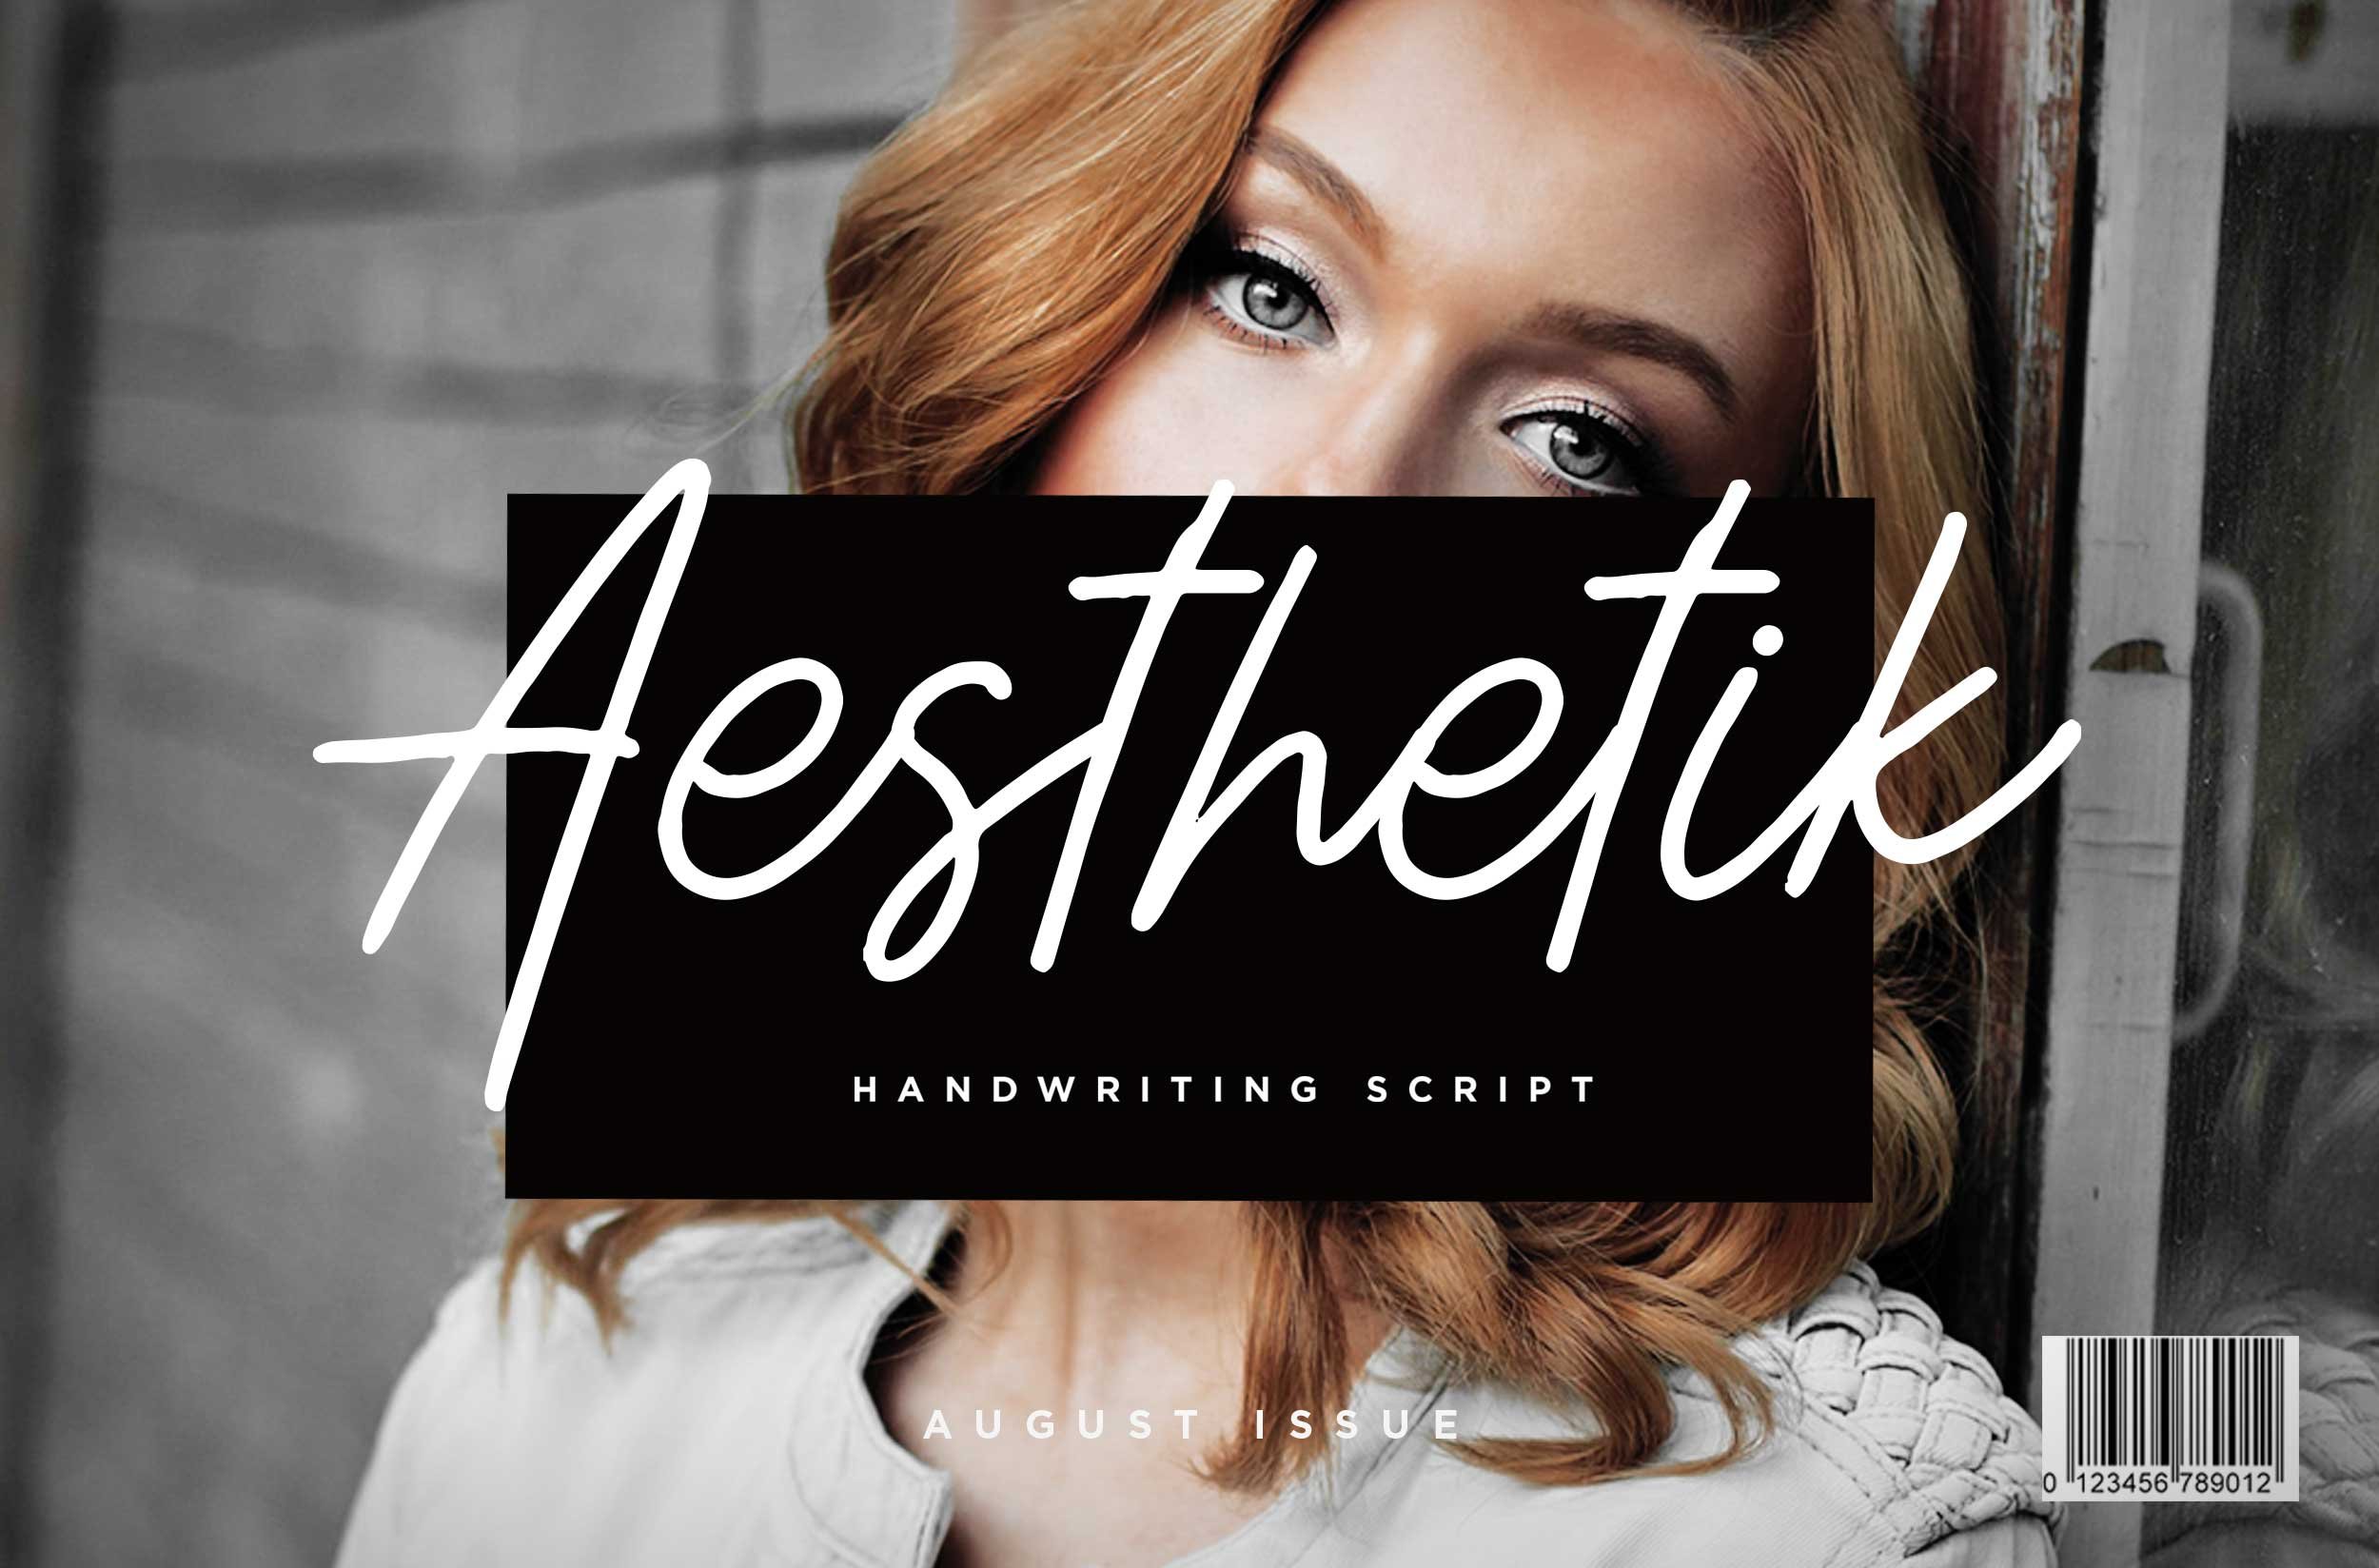 Aesthetik | Handwriting Font cover image.